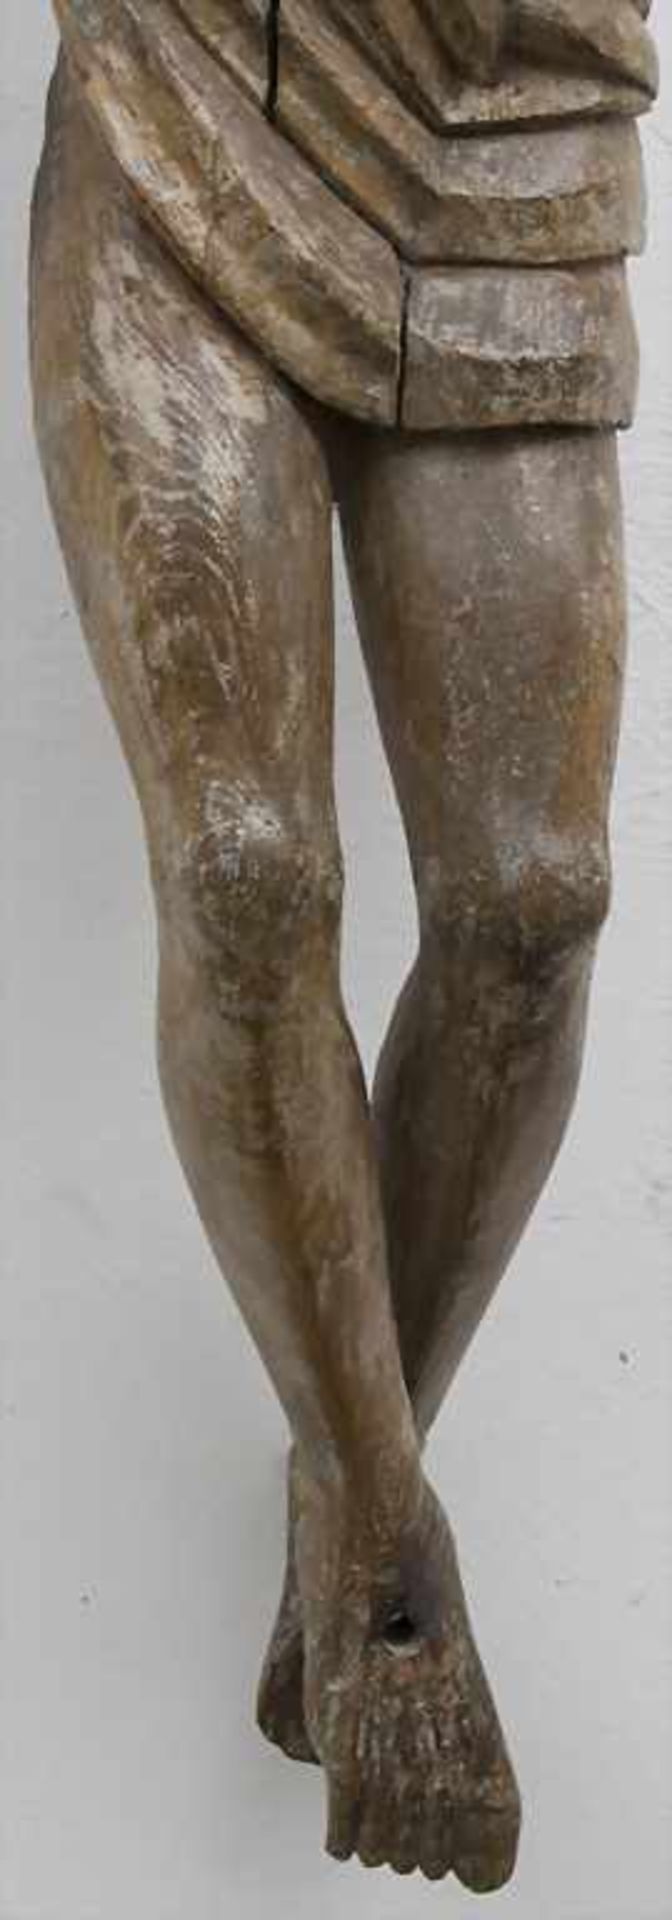 Holzskulptur 'Corpus Christi' / A wooden sculpture 'Corpus Christi', 16-17. Jh. Elsaß-Lothringen, - Bild 12 aus 18